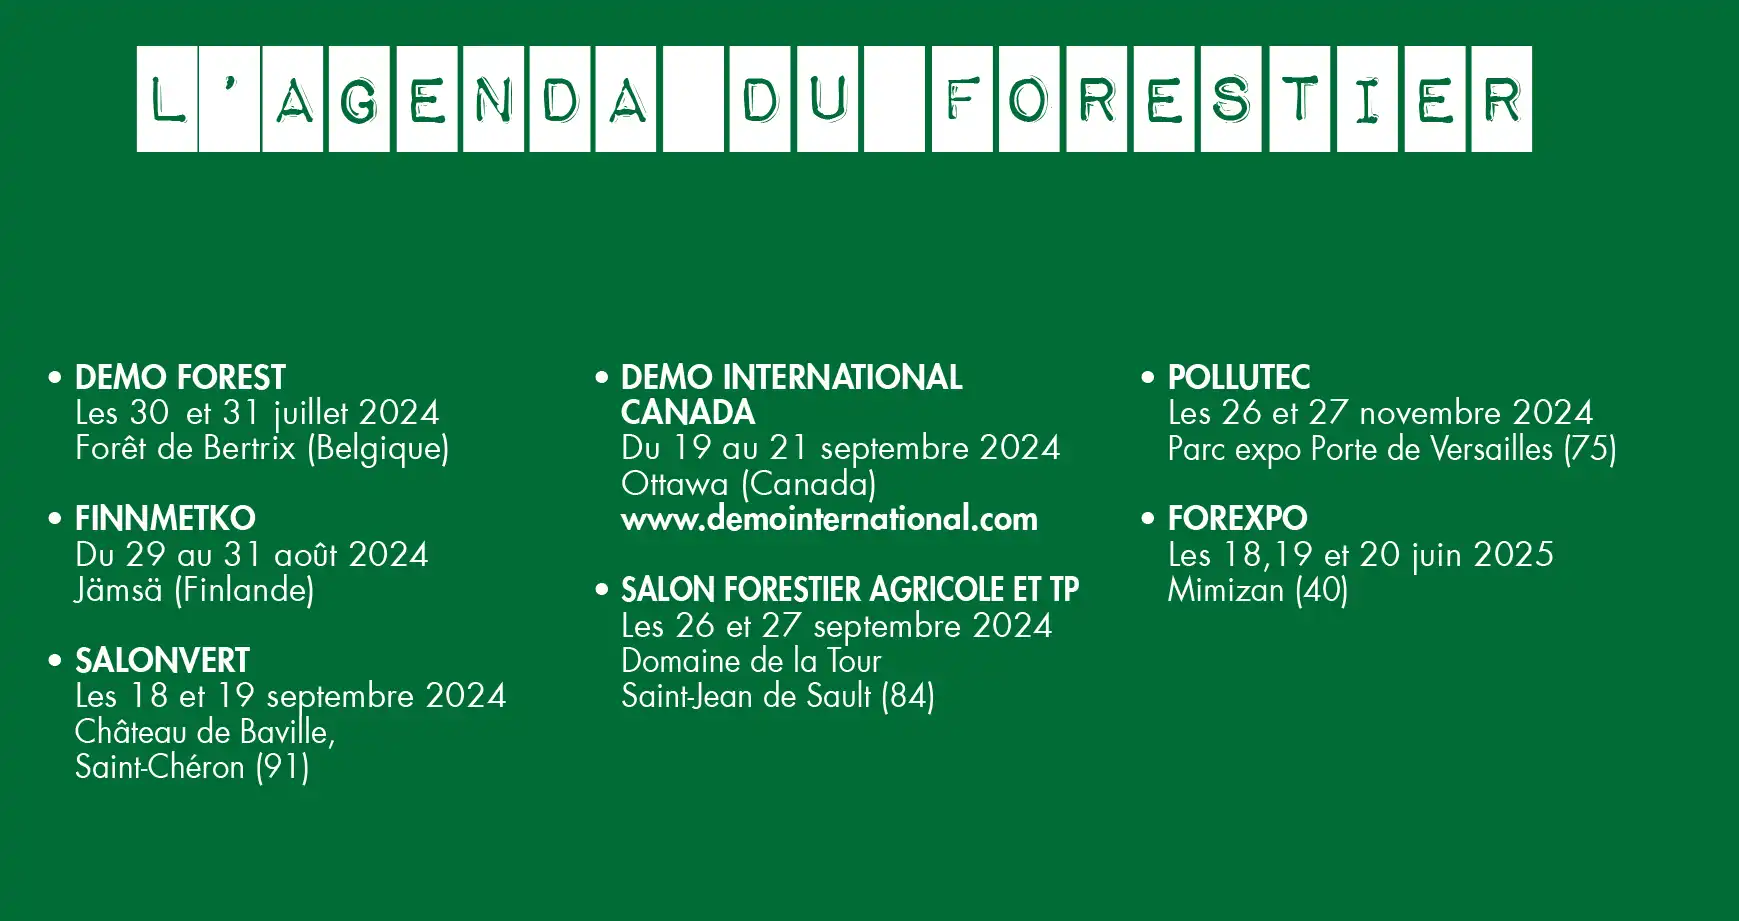 image agenda du forestier juillet-août 2024